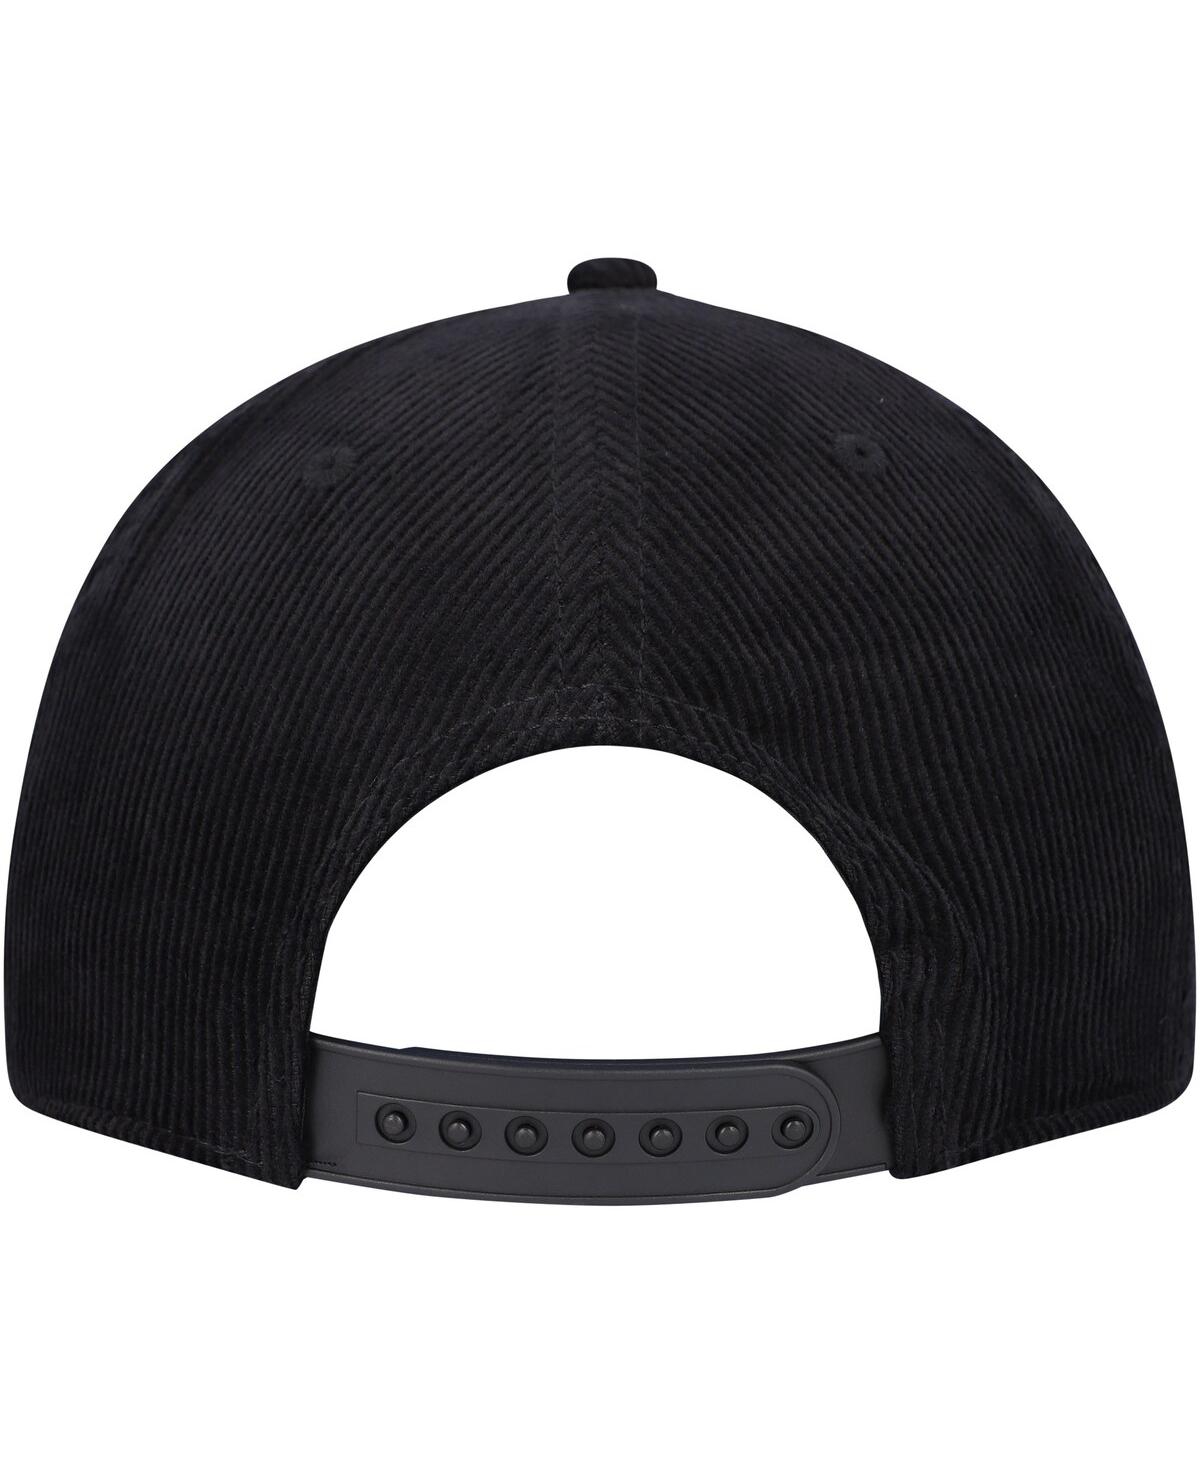 Shop American Needle Men's Black Miller Roscoe Corduroy Adjustable Hat